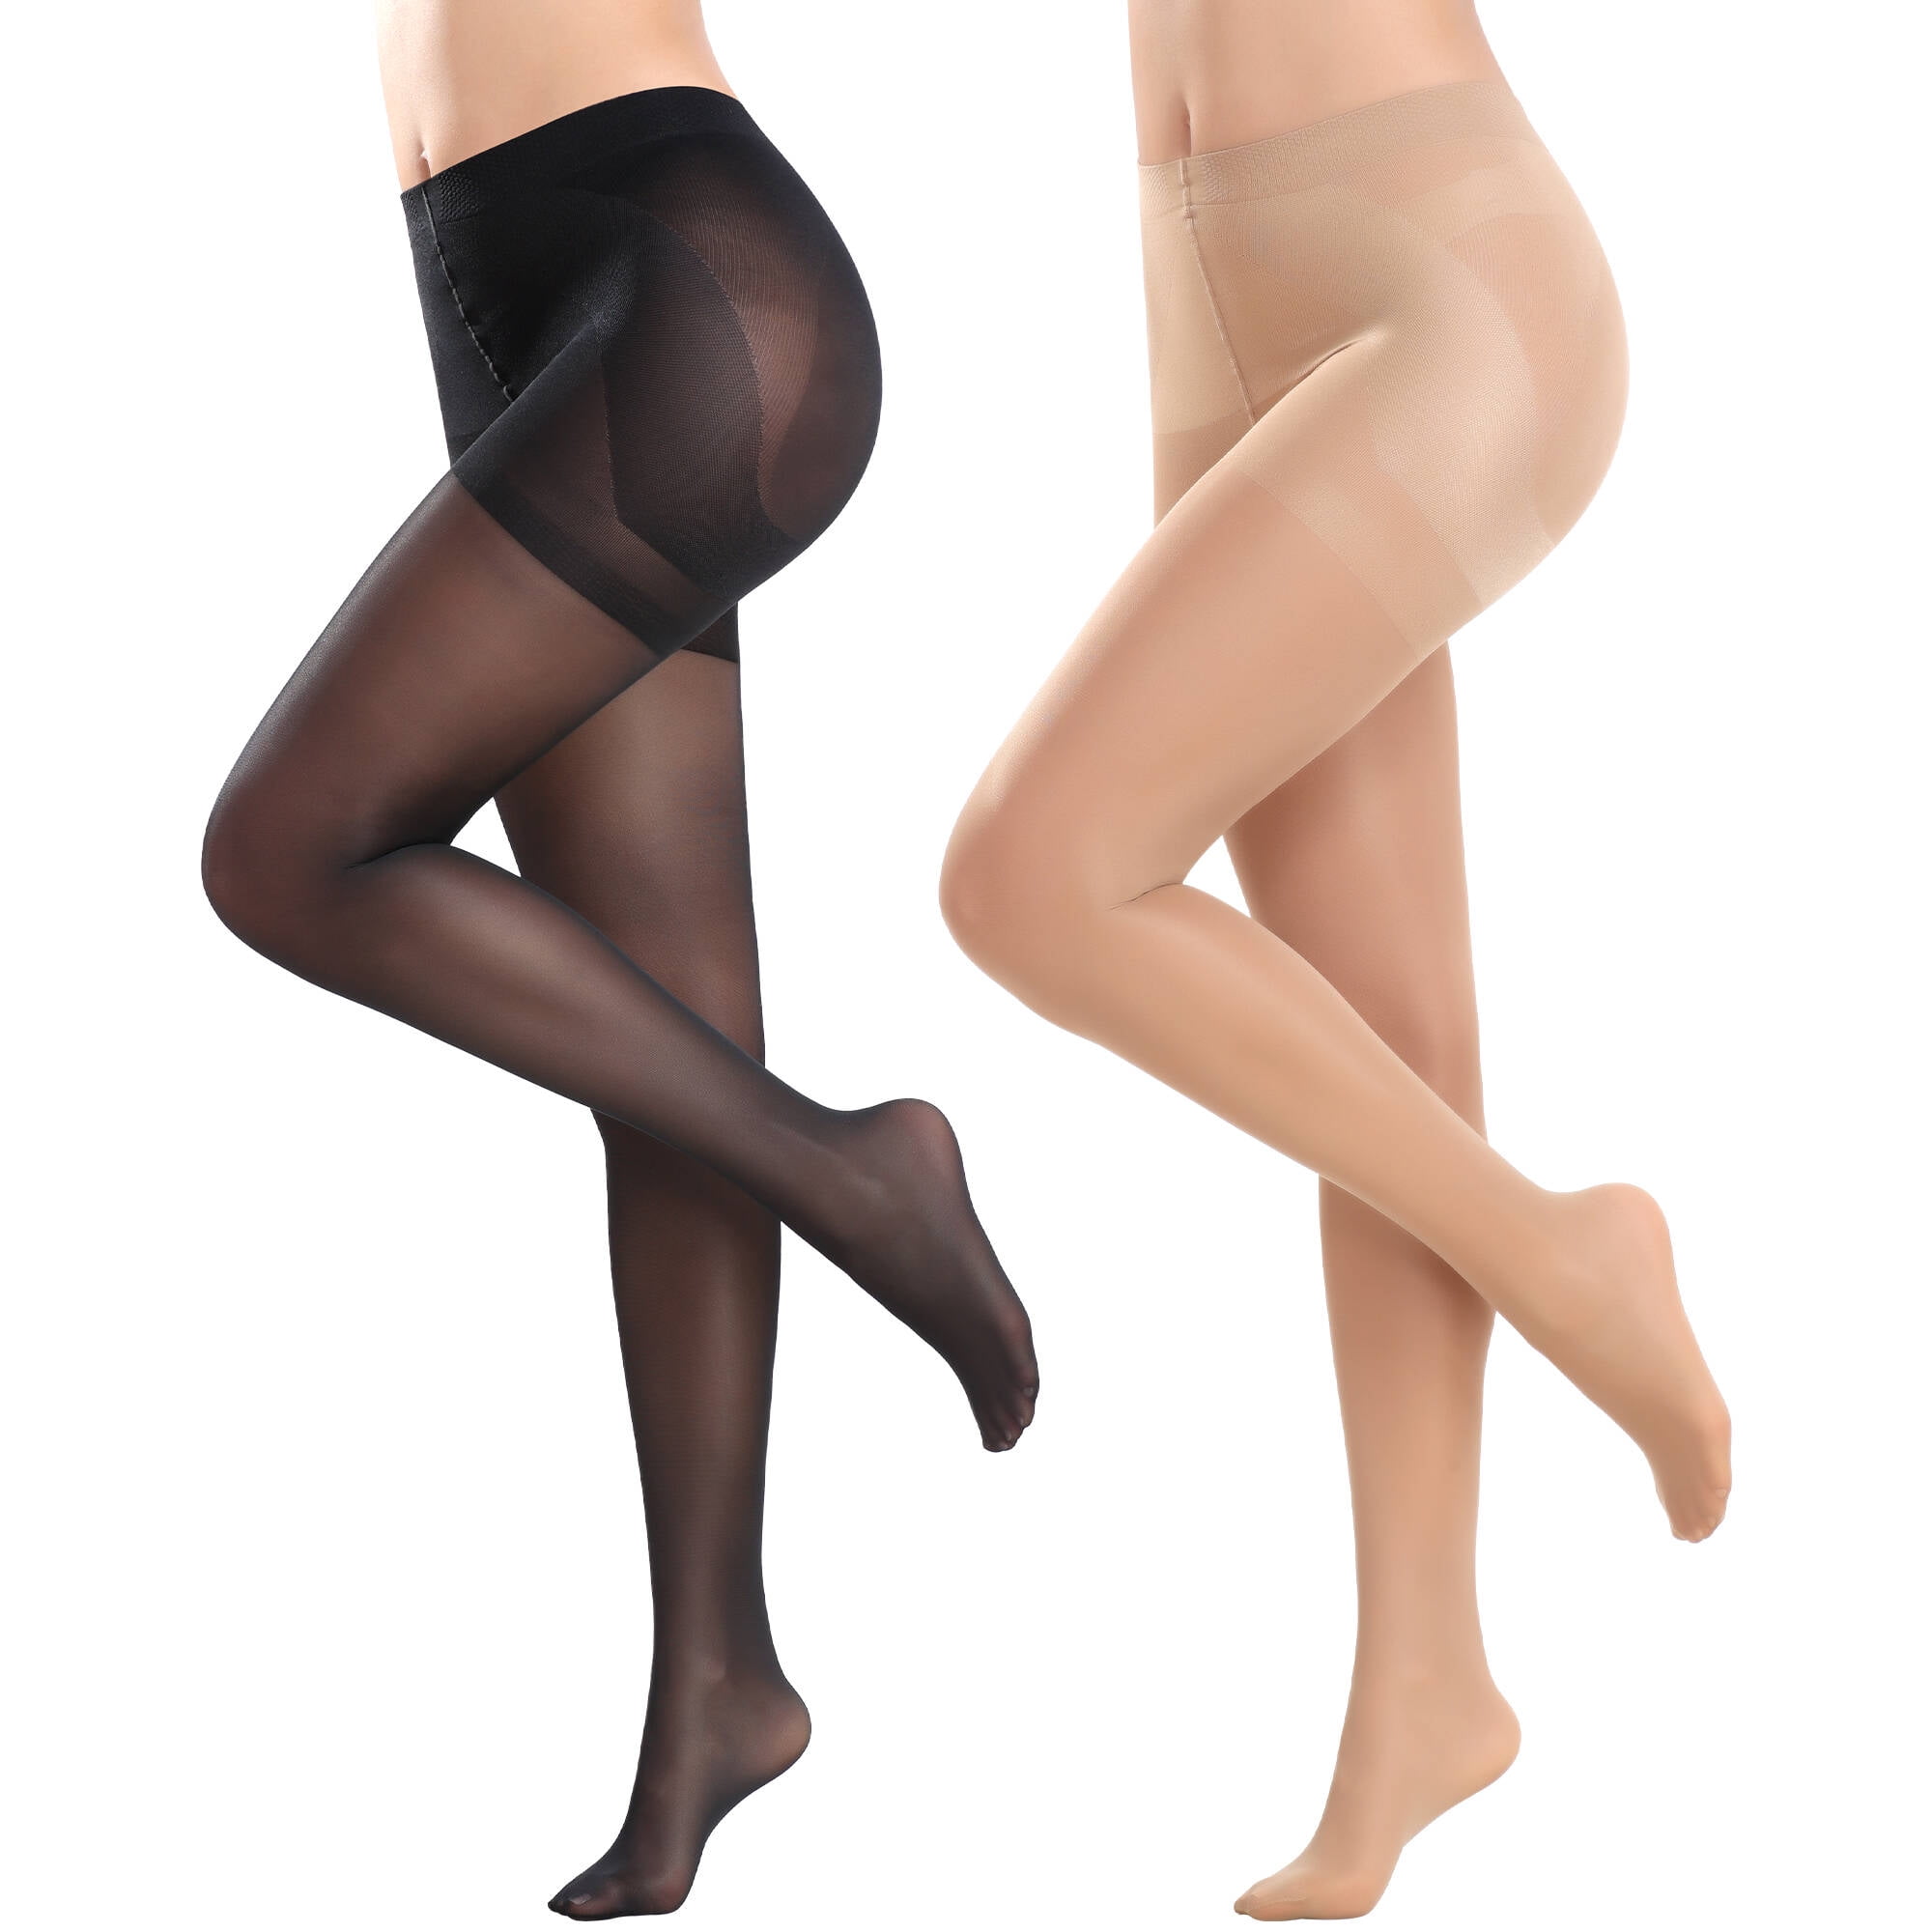 Wholesale Isadora Women's Panties Sheer Nylon With Size Option (144 Packs)